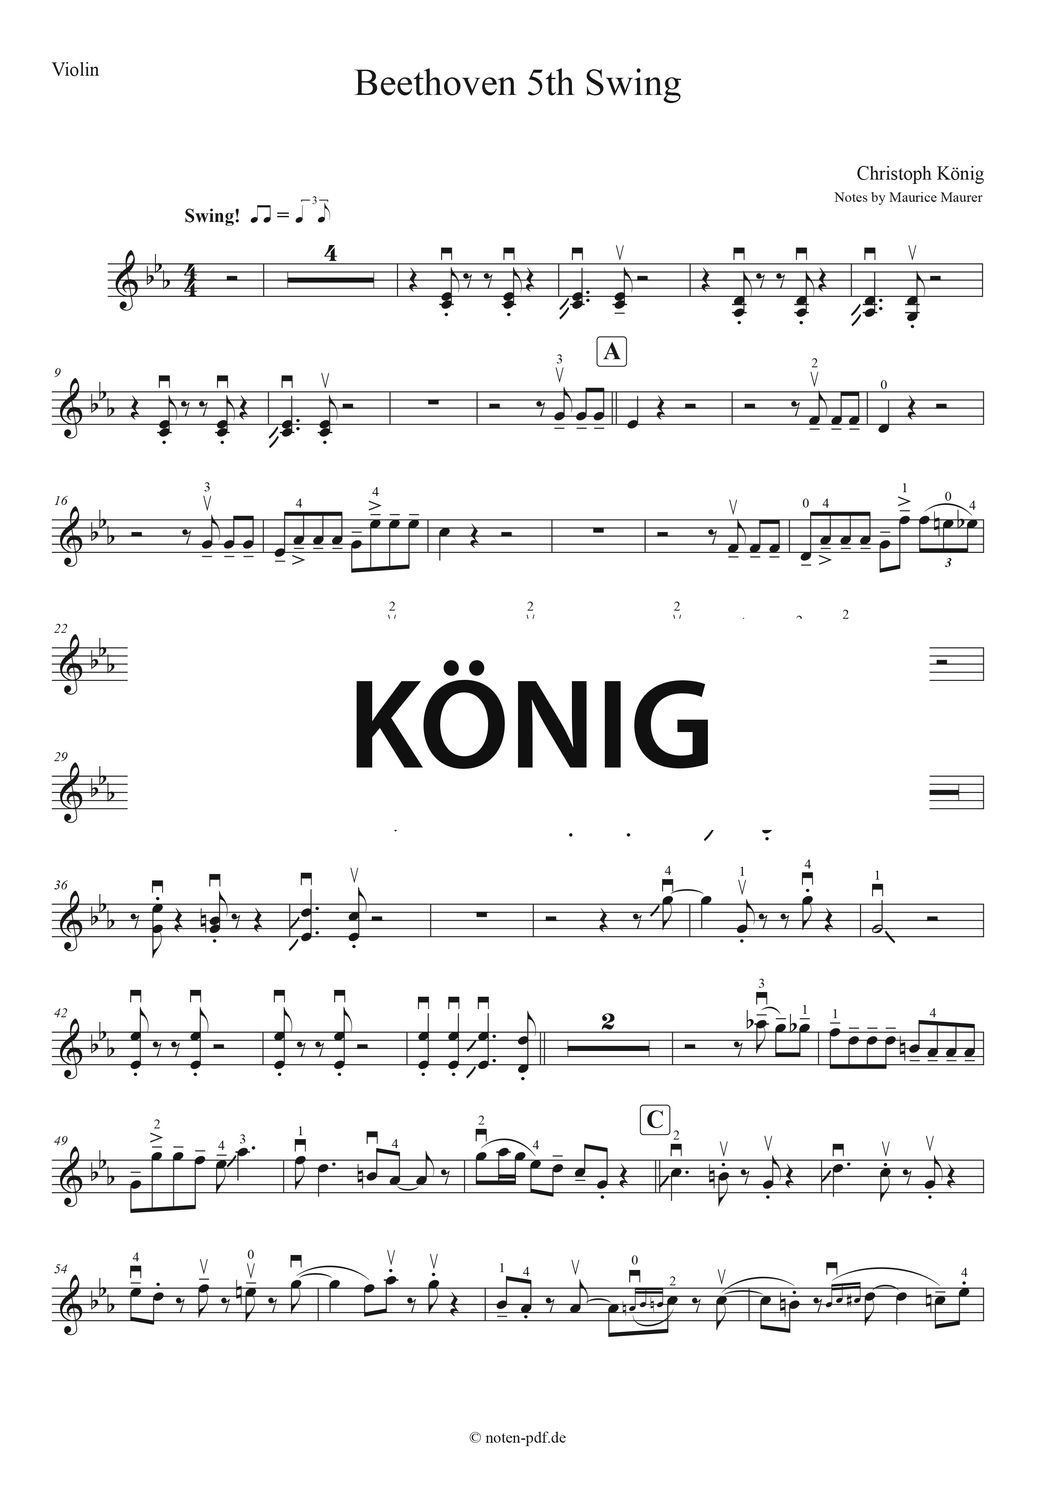 König: Beethoven 5th Swing + MP3